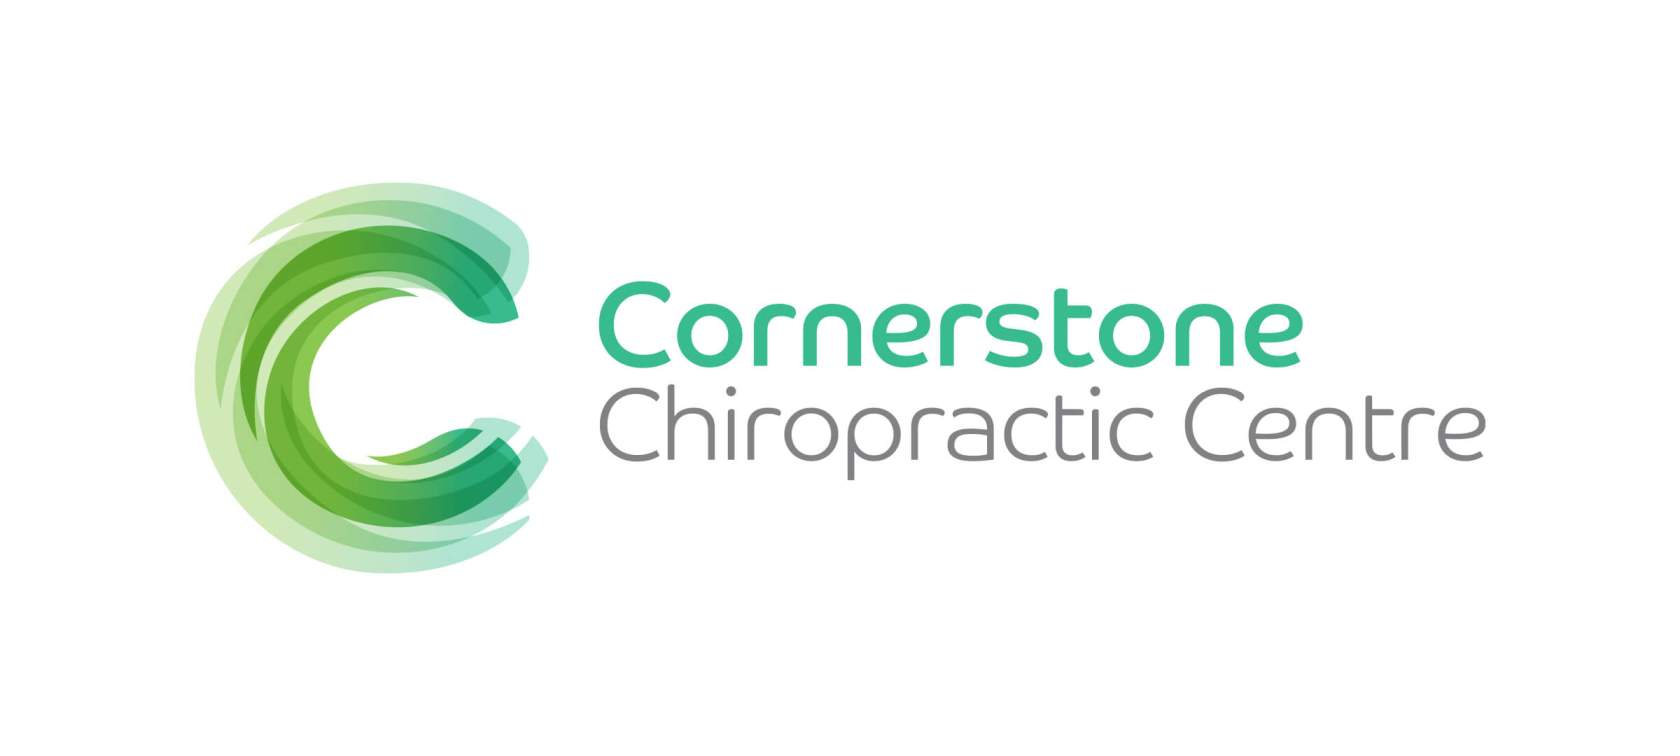 Cornerstone Chiropractic Centre logo